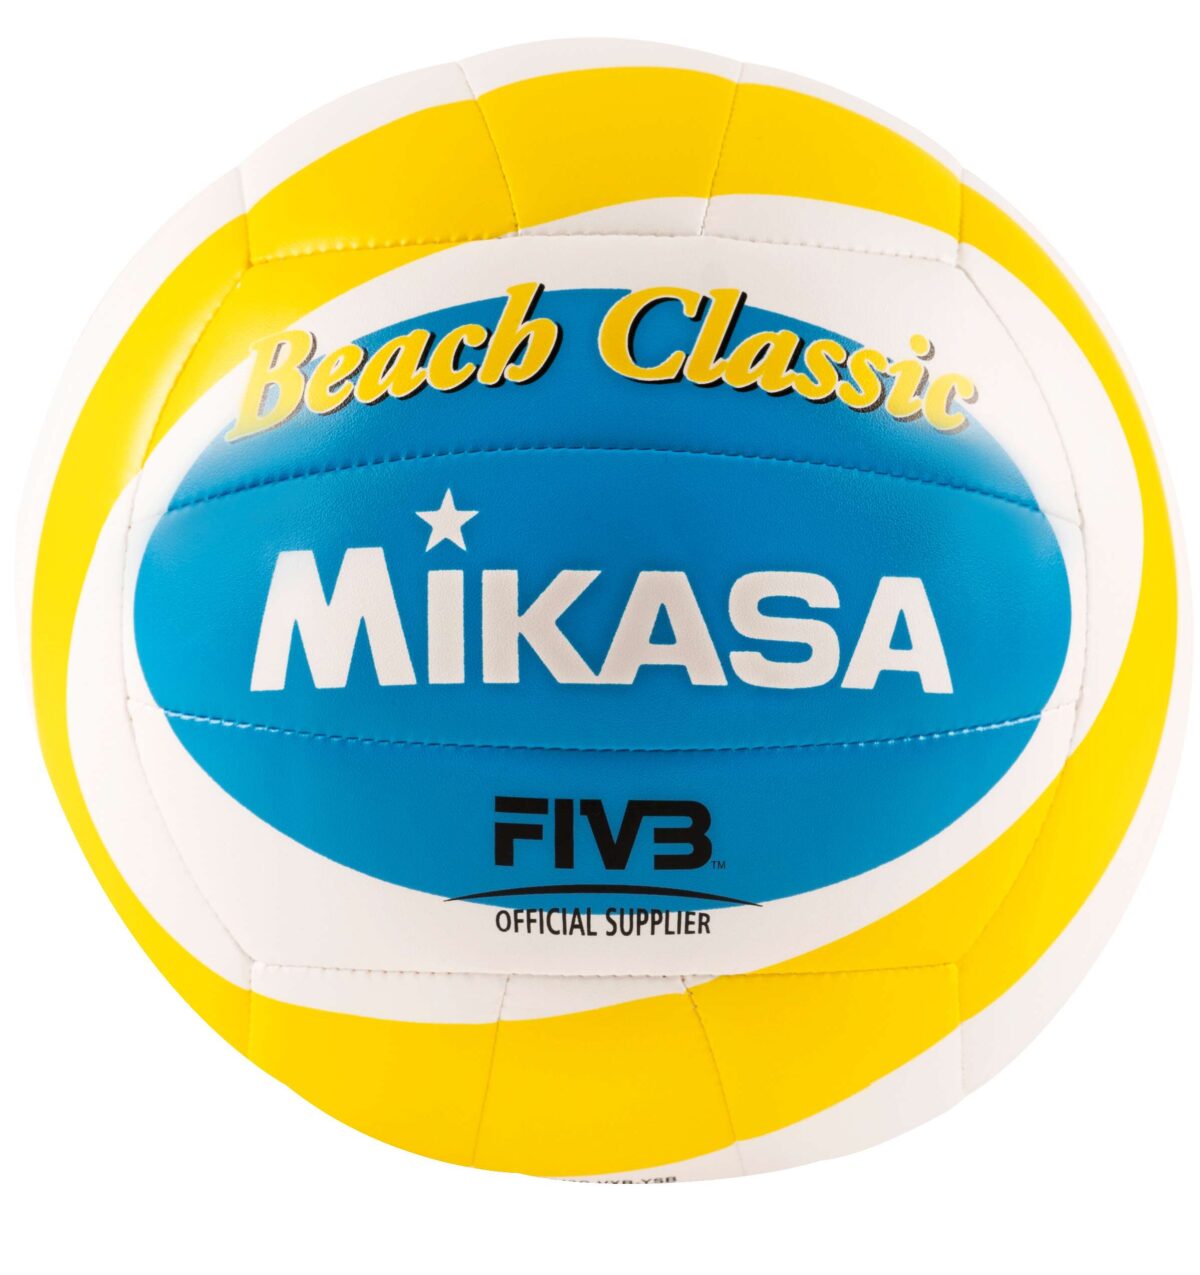 Mikasa Beachvolleyball "Beach Classic BV543C-VXB-YSB" - Bälle - Mikasa